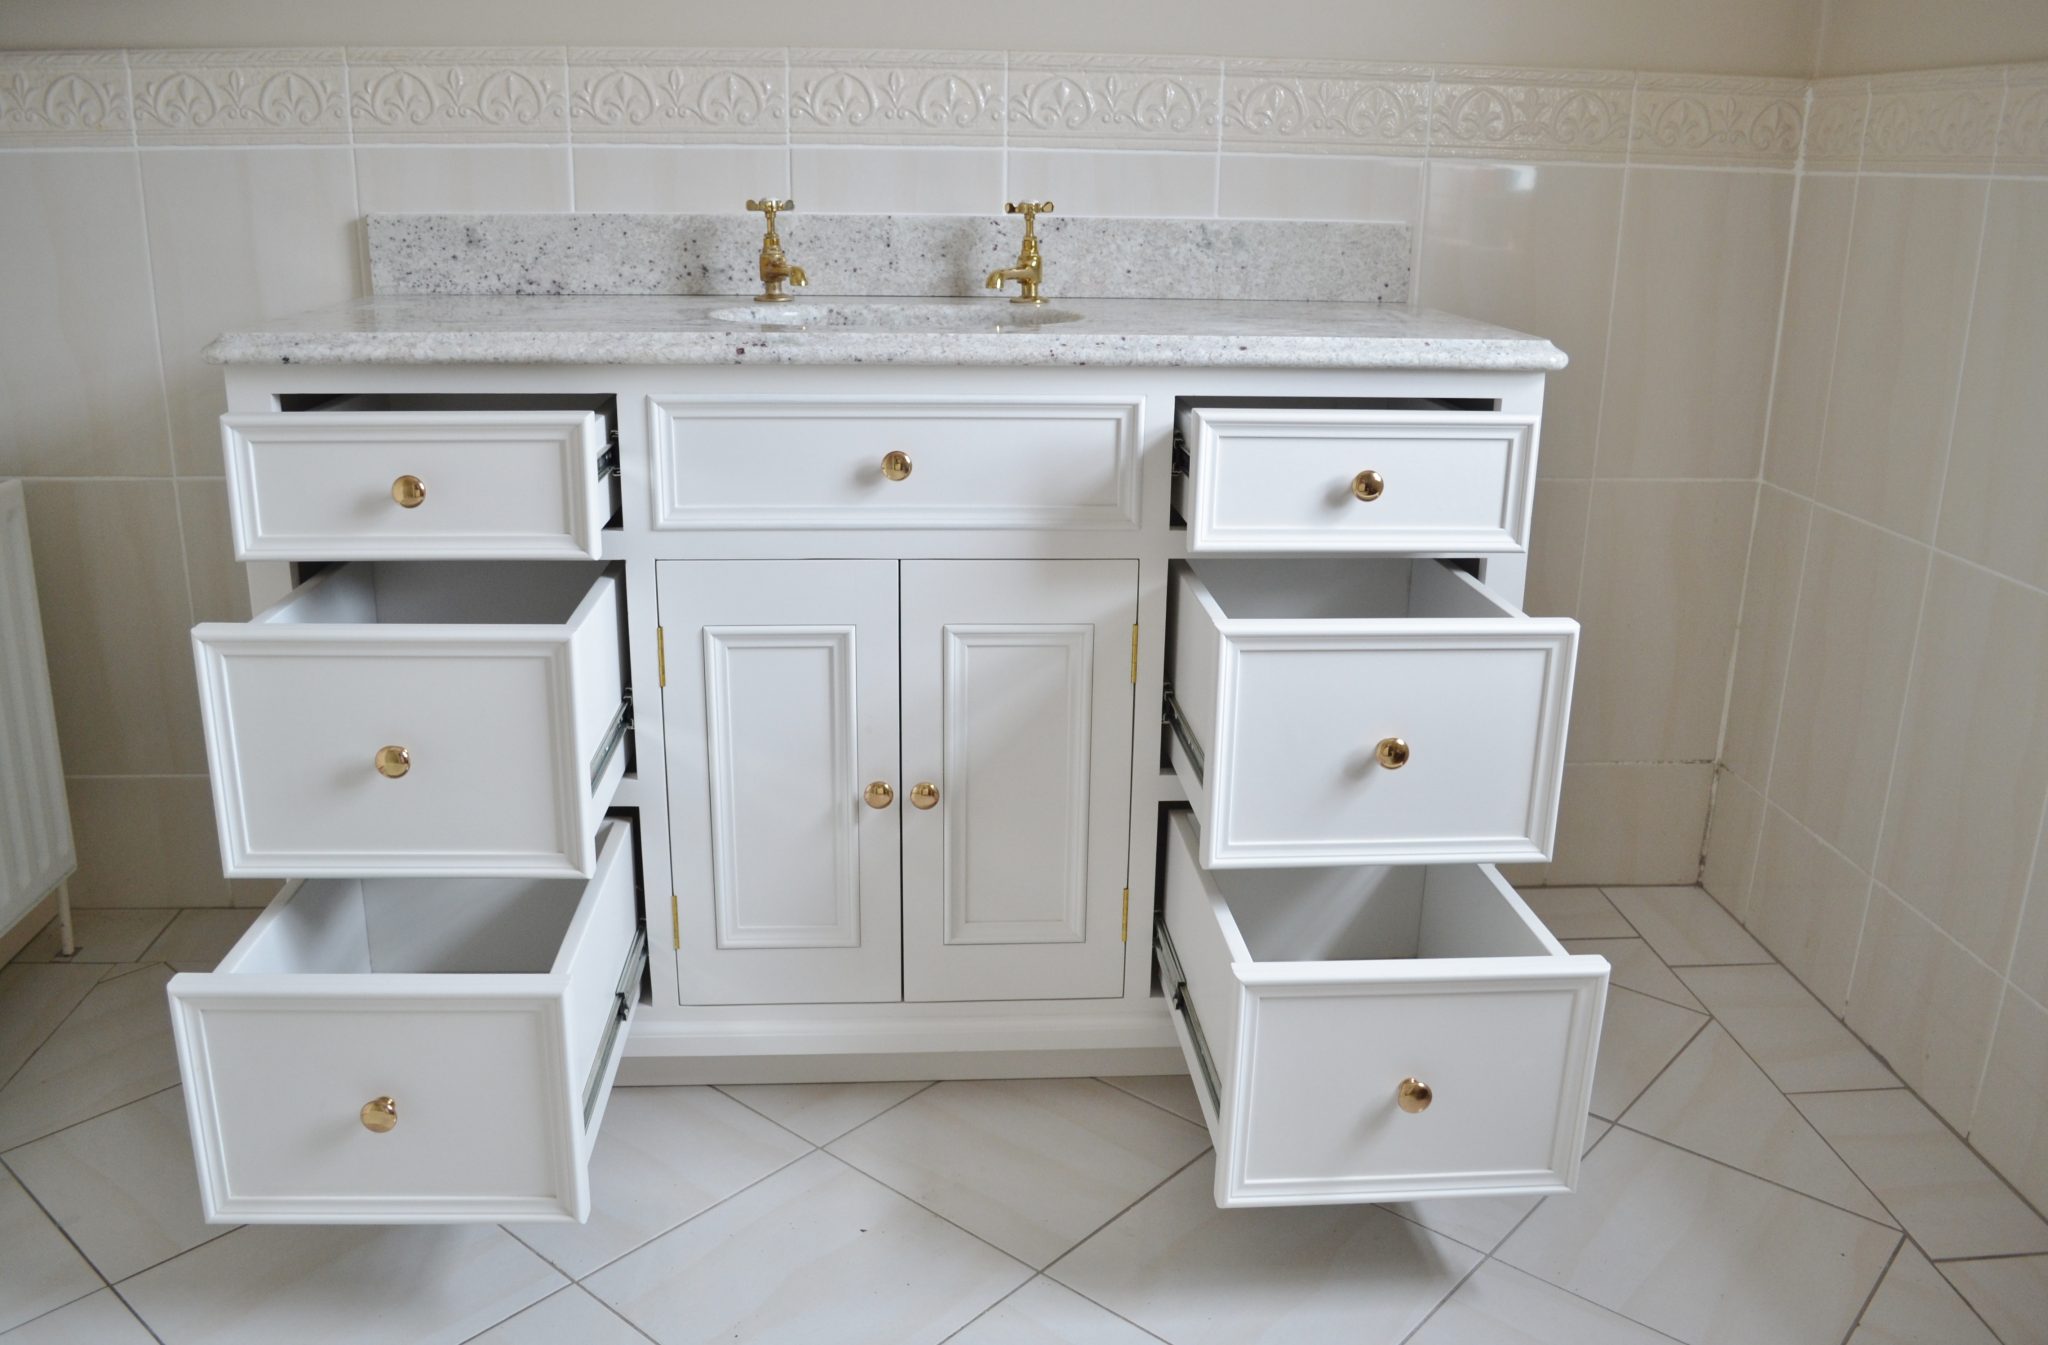 bespoke bathroom furniture yorkshire Bathroom cabinet bespoke undermounted furniture deanery